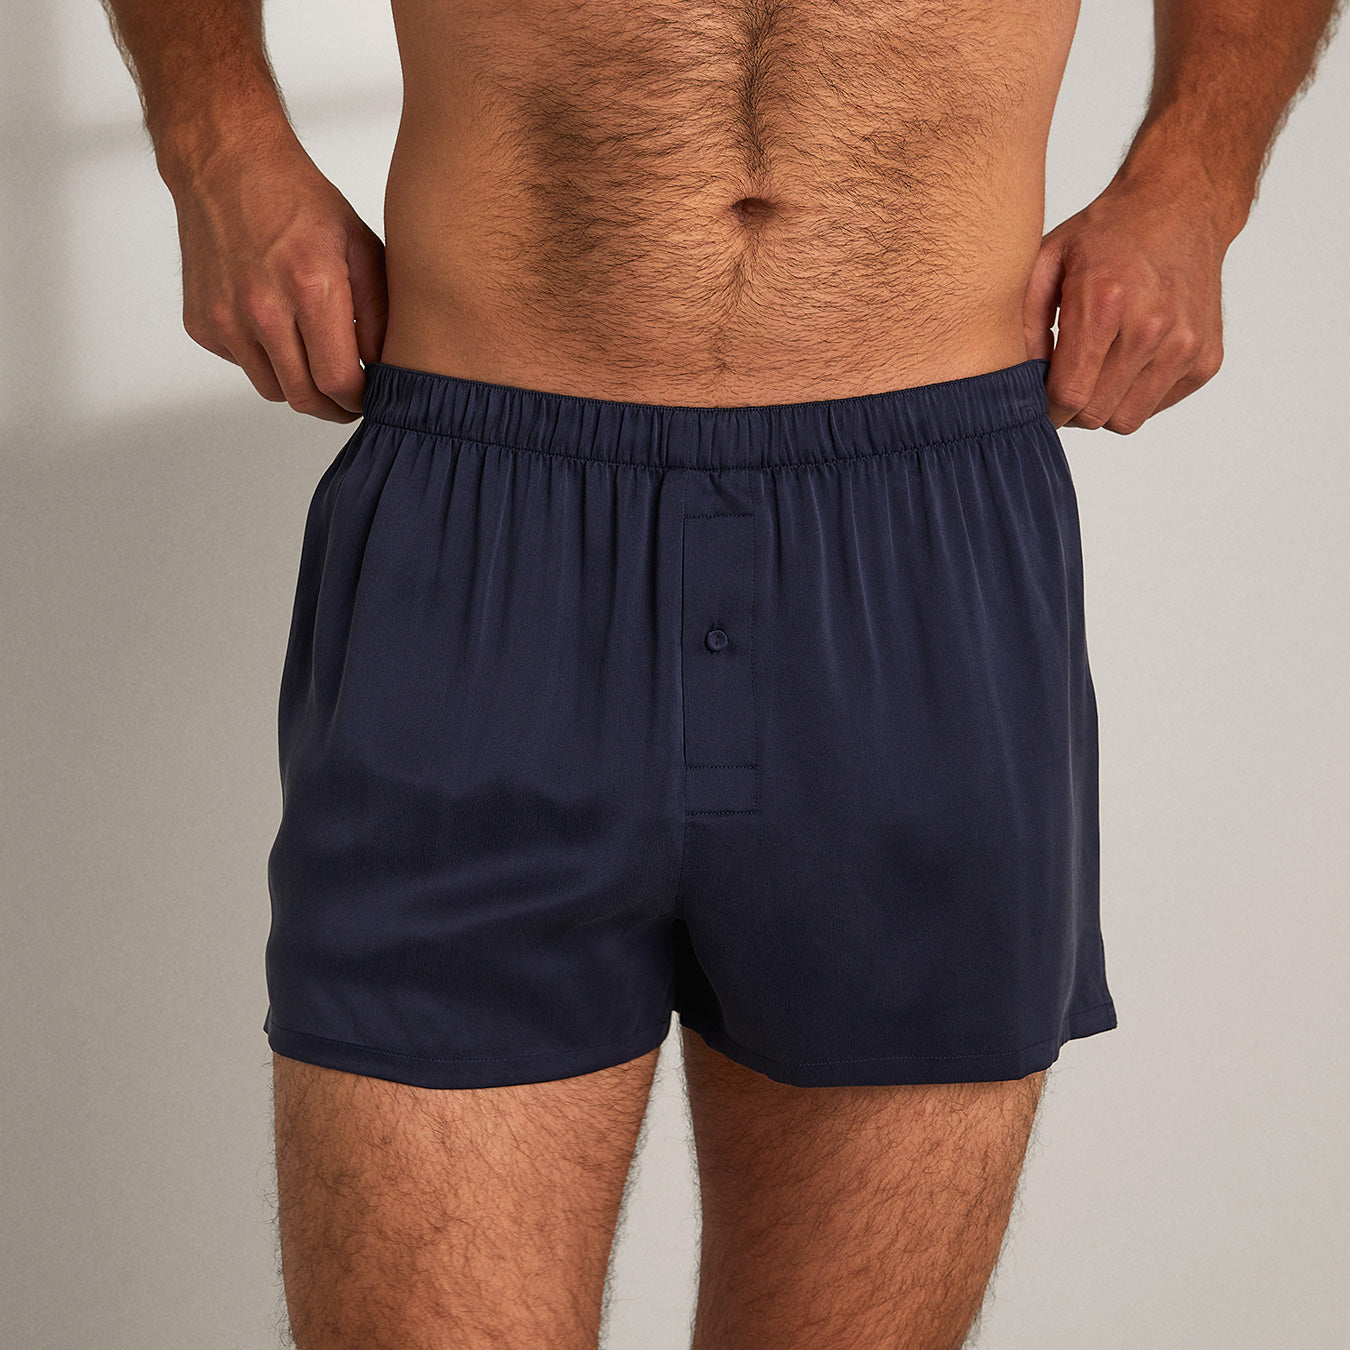 Hot Sale Underwear Male Boxers Briefs Male Elastic Men's Briefs Silky